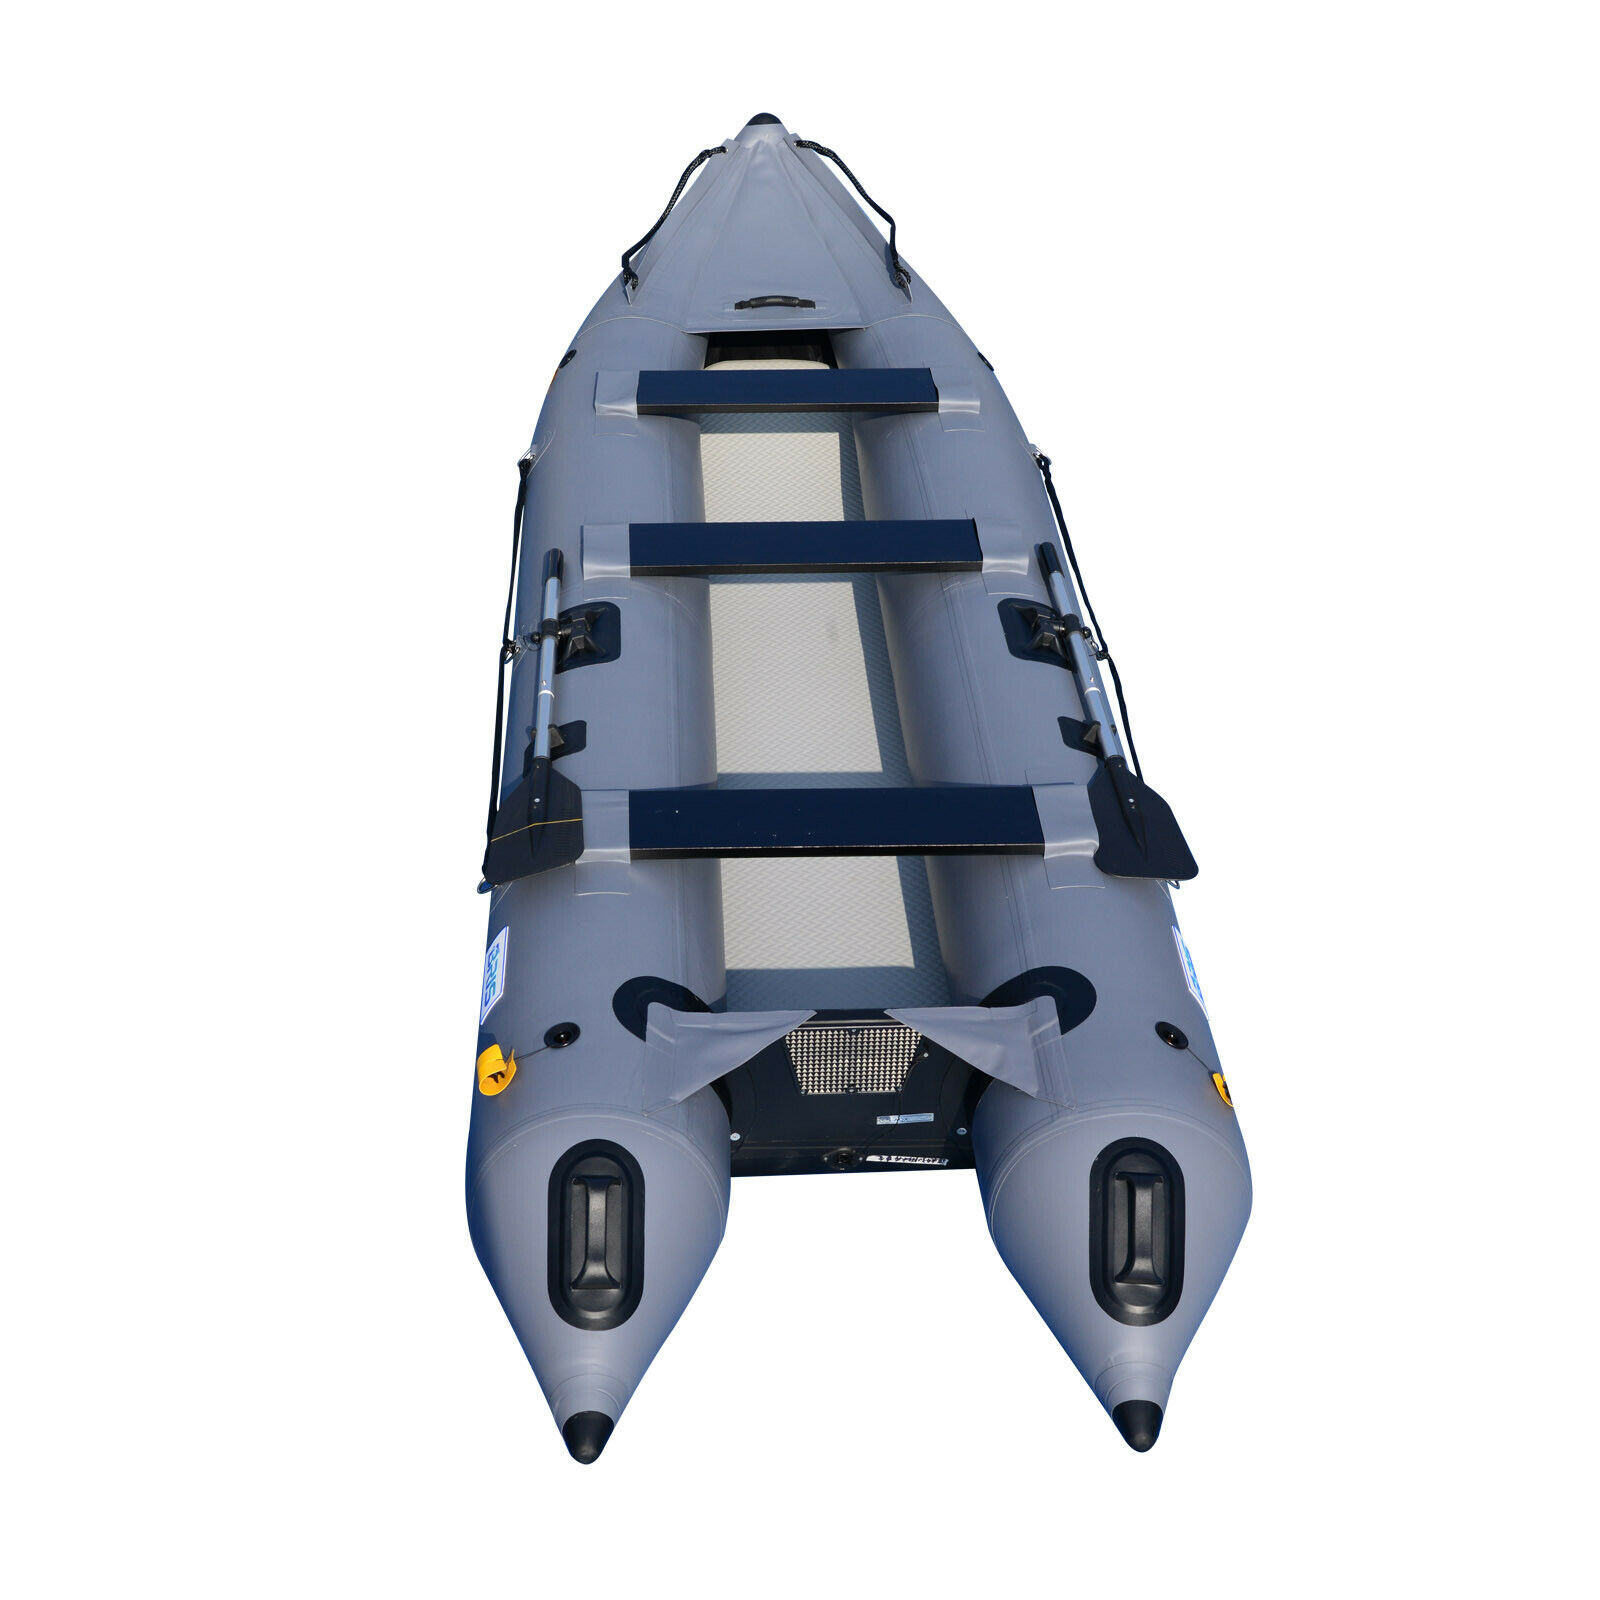 BRIS 14.1ft Inflatable Kayka Canoe Boat Fishing Tender Poonton Boat - $699.00